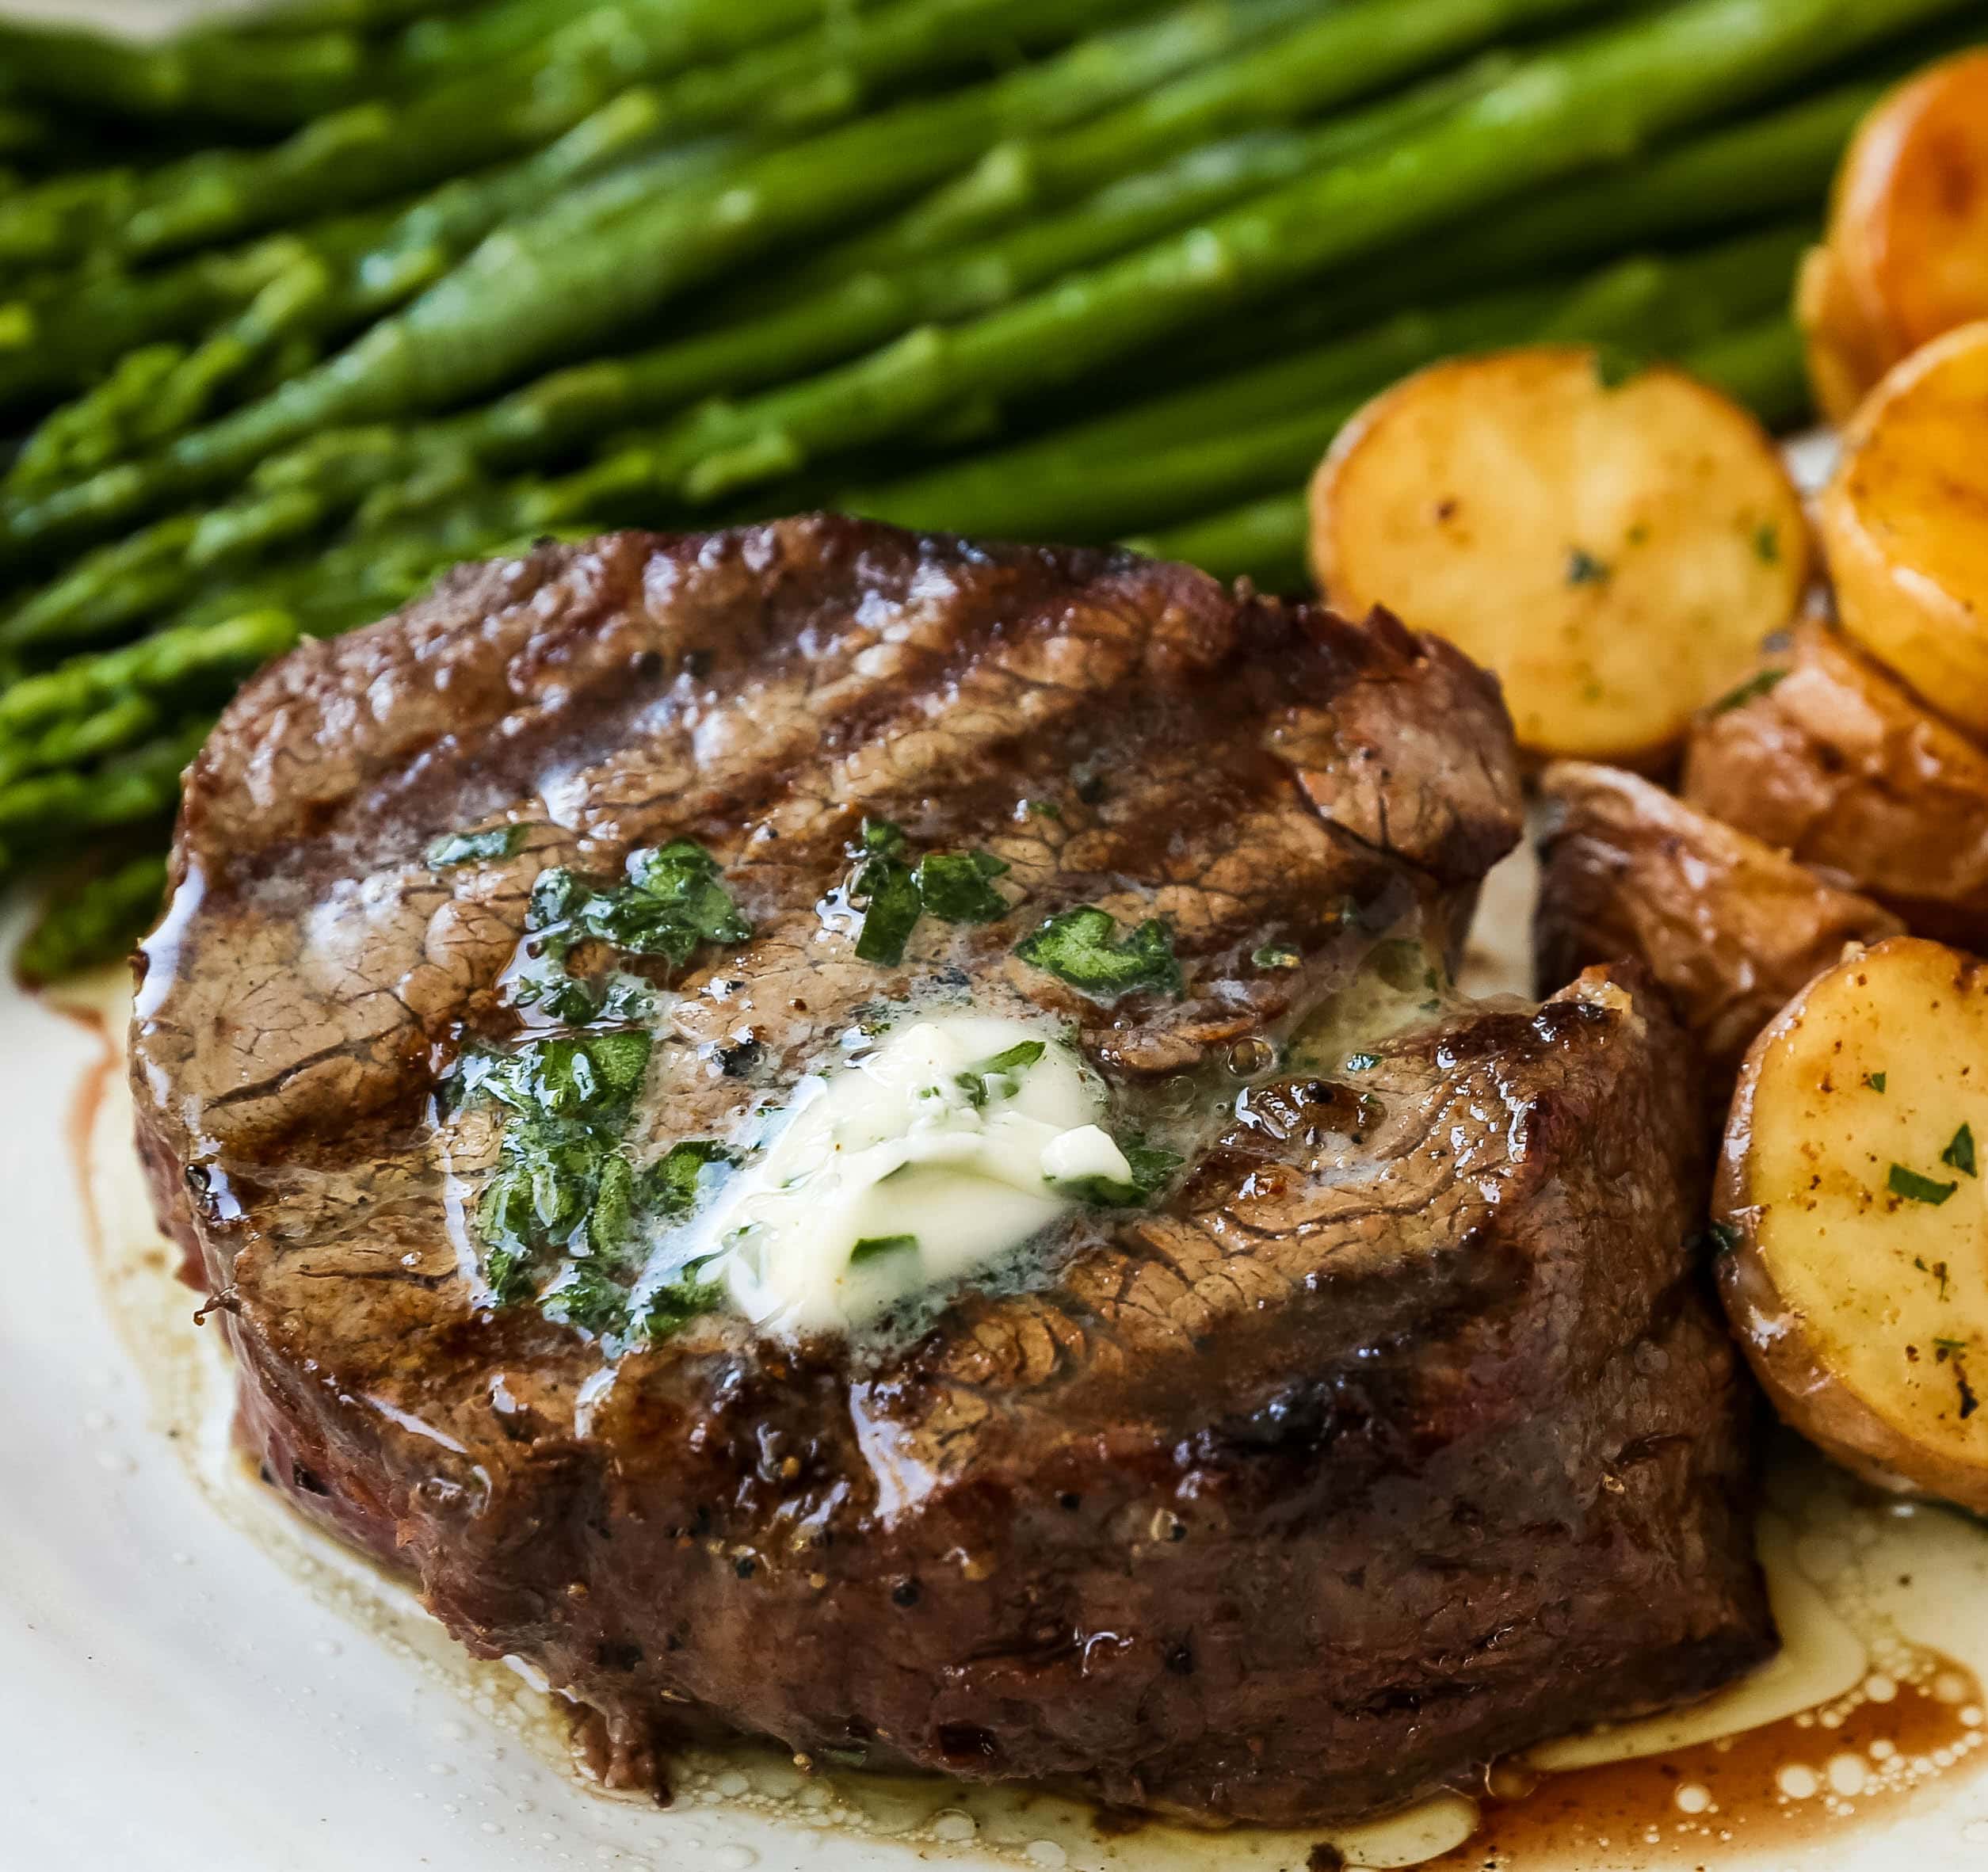 https://www.modernhoney.com/wp-content/uploads/2020/06/How-to-Grill-the-Perfect-Steak-6.jpg